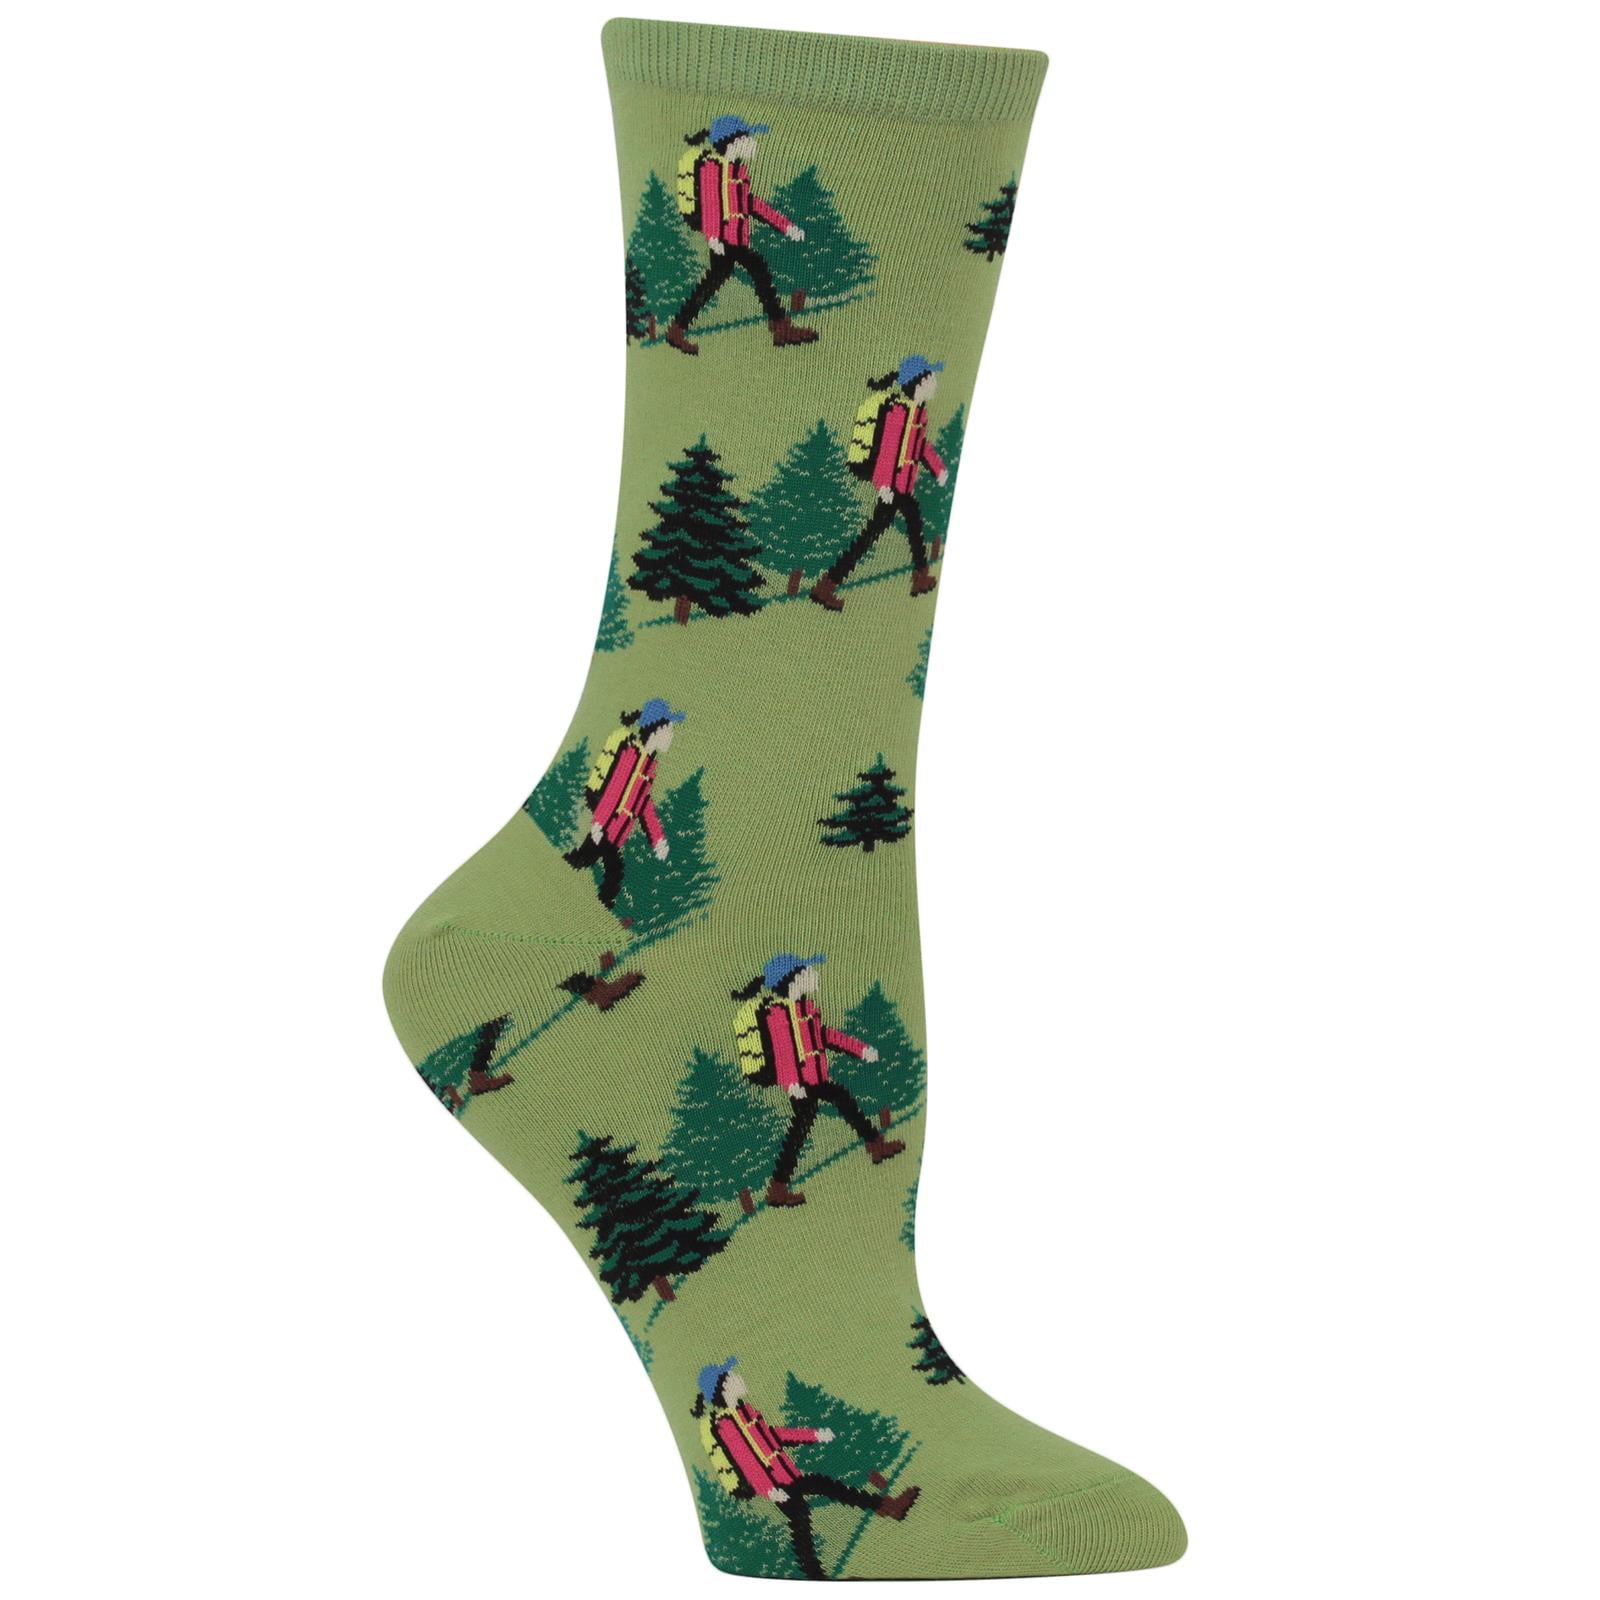 Hot Sox Women dress socks - Walmart.com